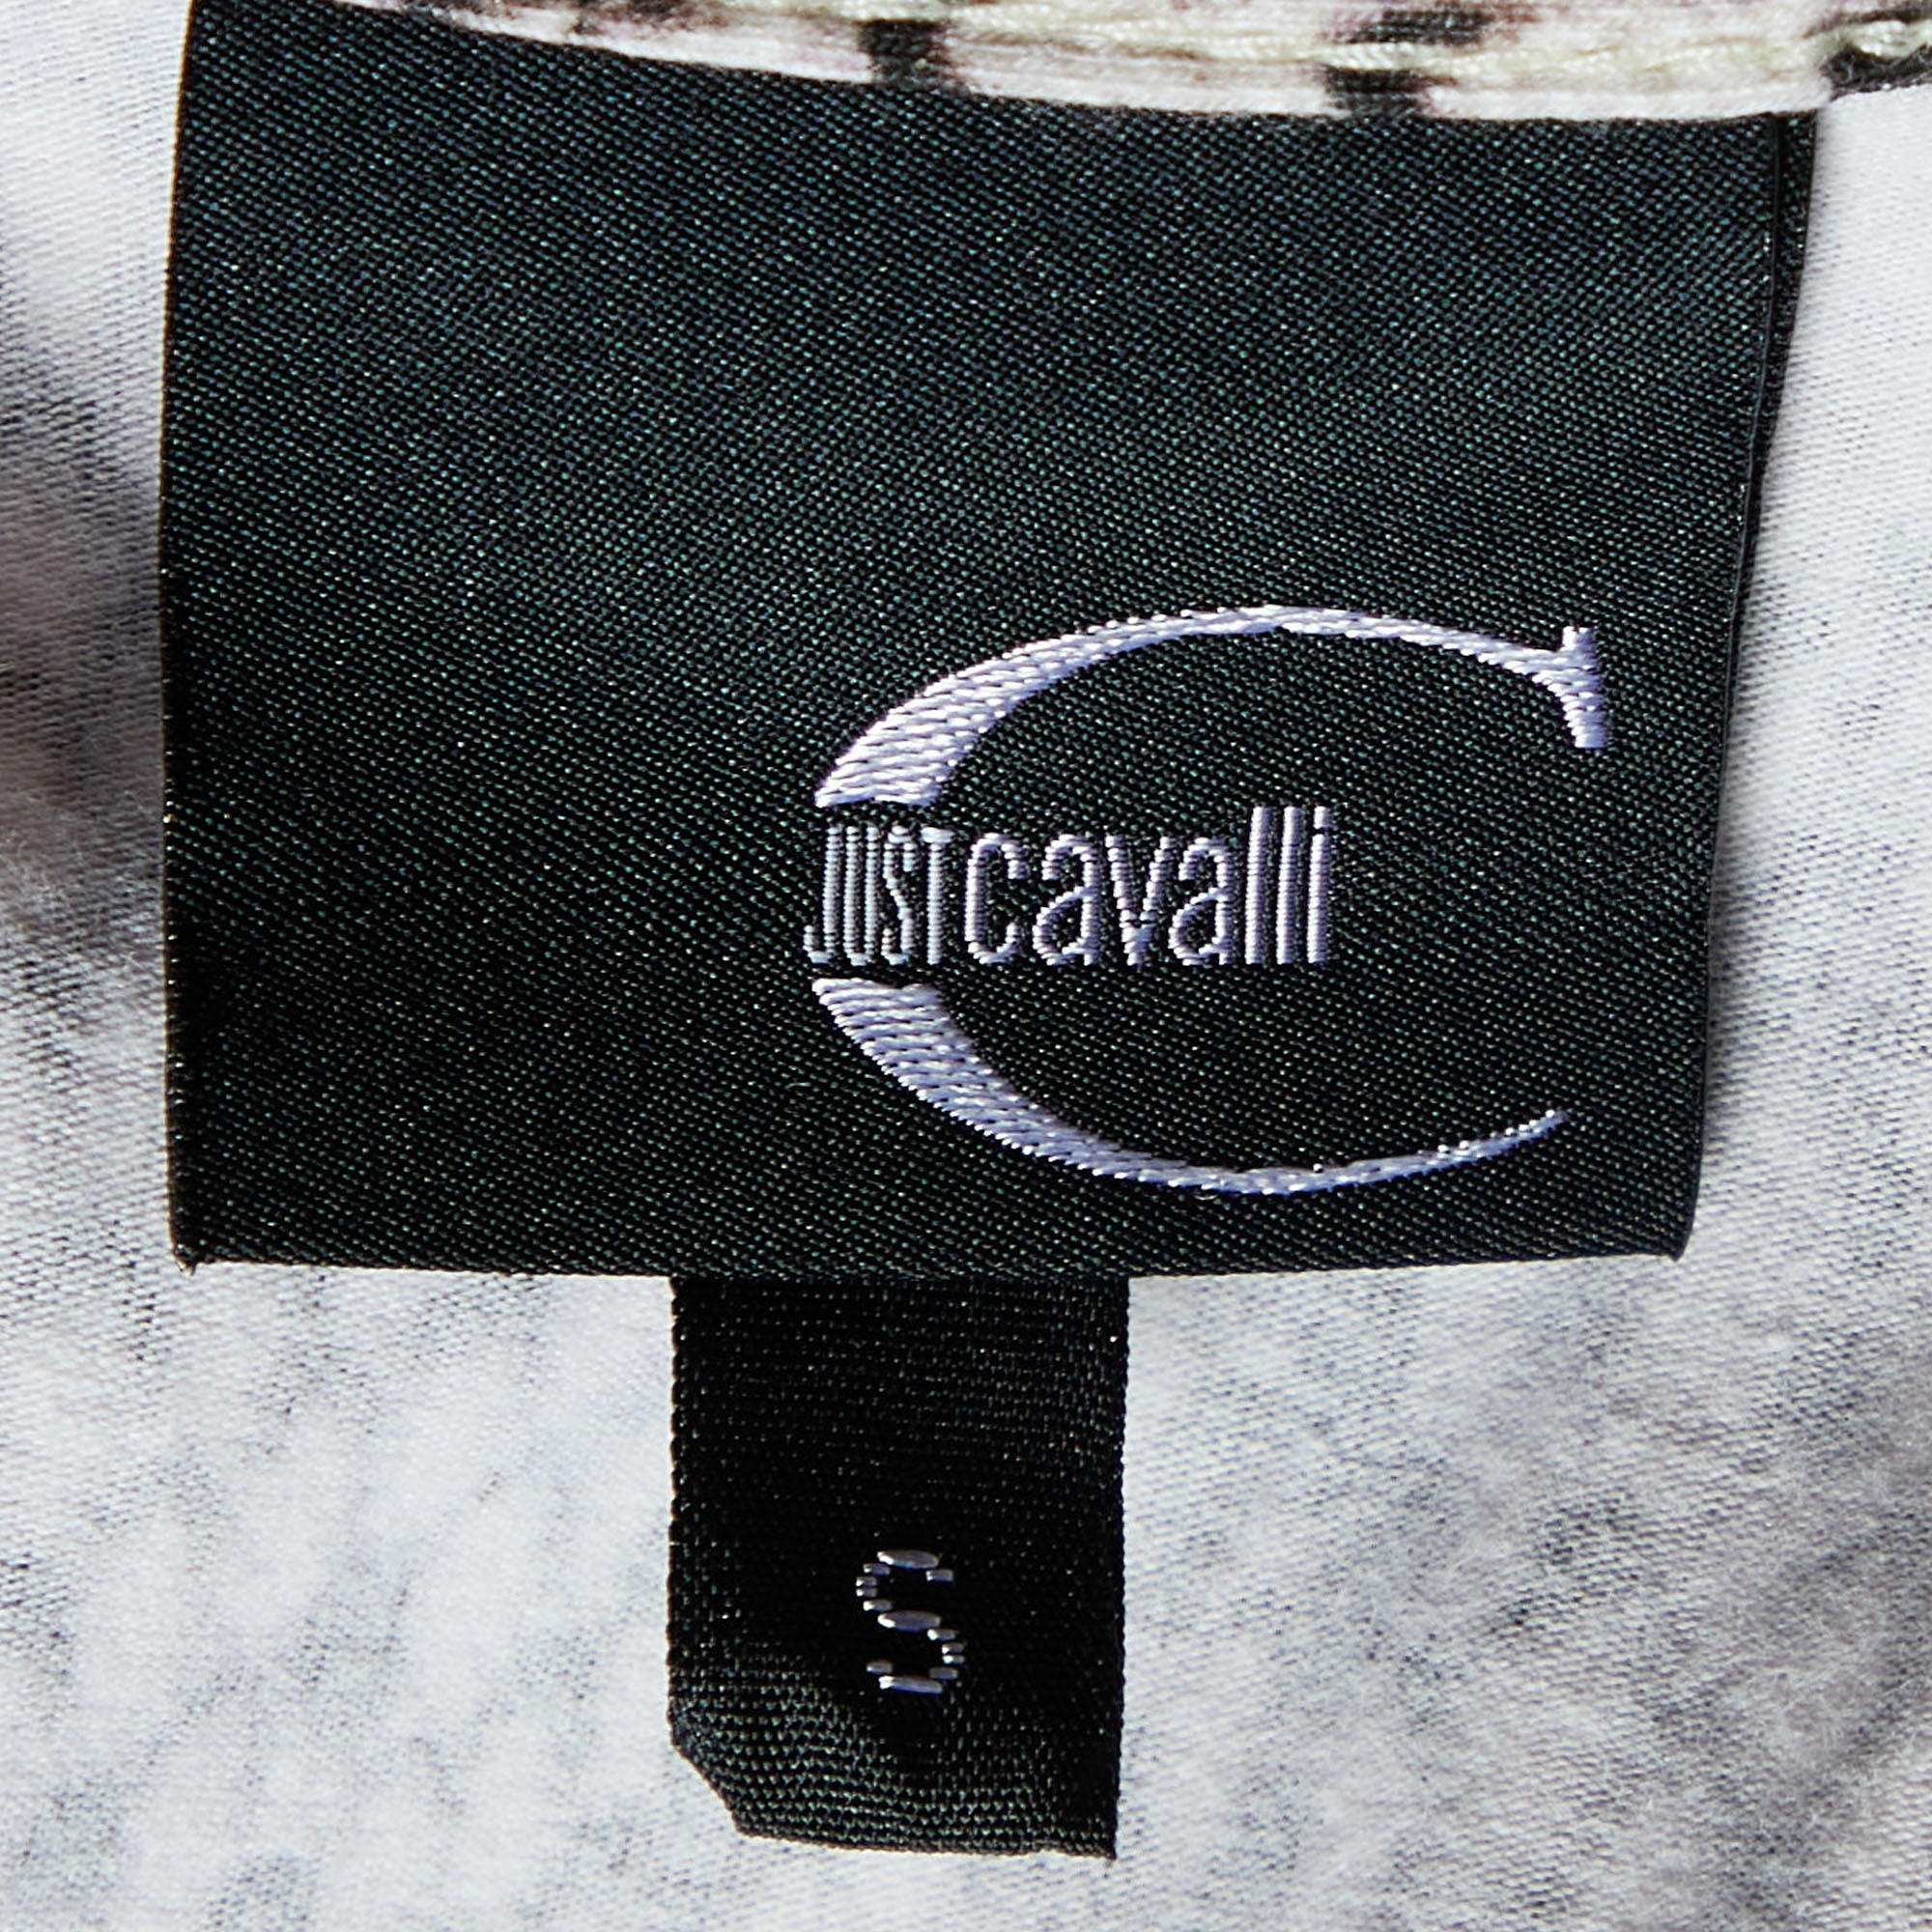 Just Cavalli Multicolor Snake Print Cotton Knit Racer Back Tank Top S